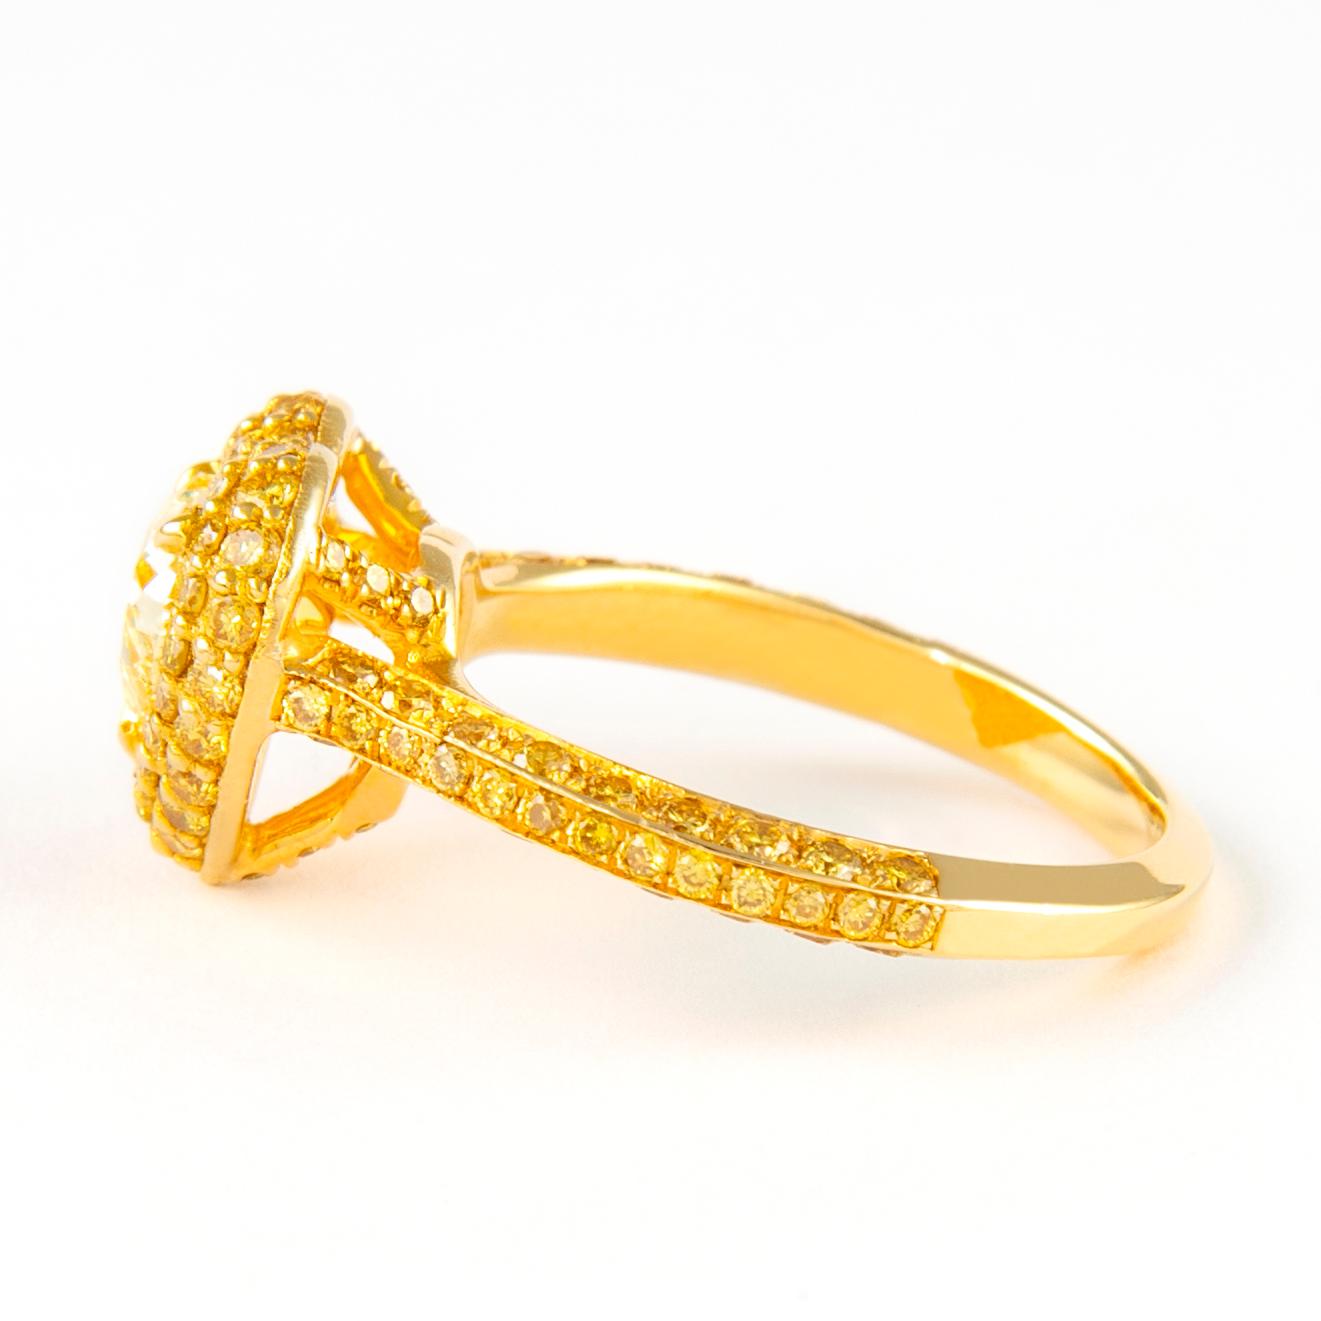 Heart Cut Alexander GIA 1.92ctt Fancy Intense Yellow Heart Diamond with Halo Ring 18k For Sale